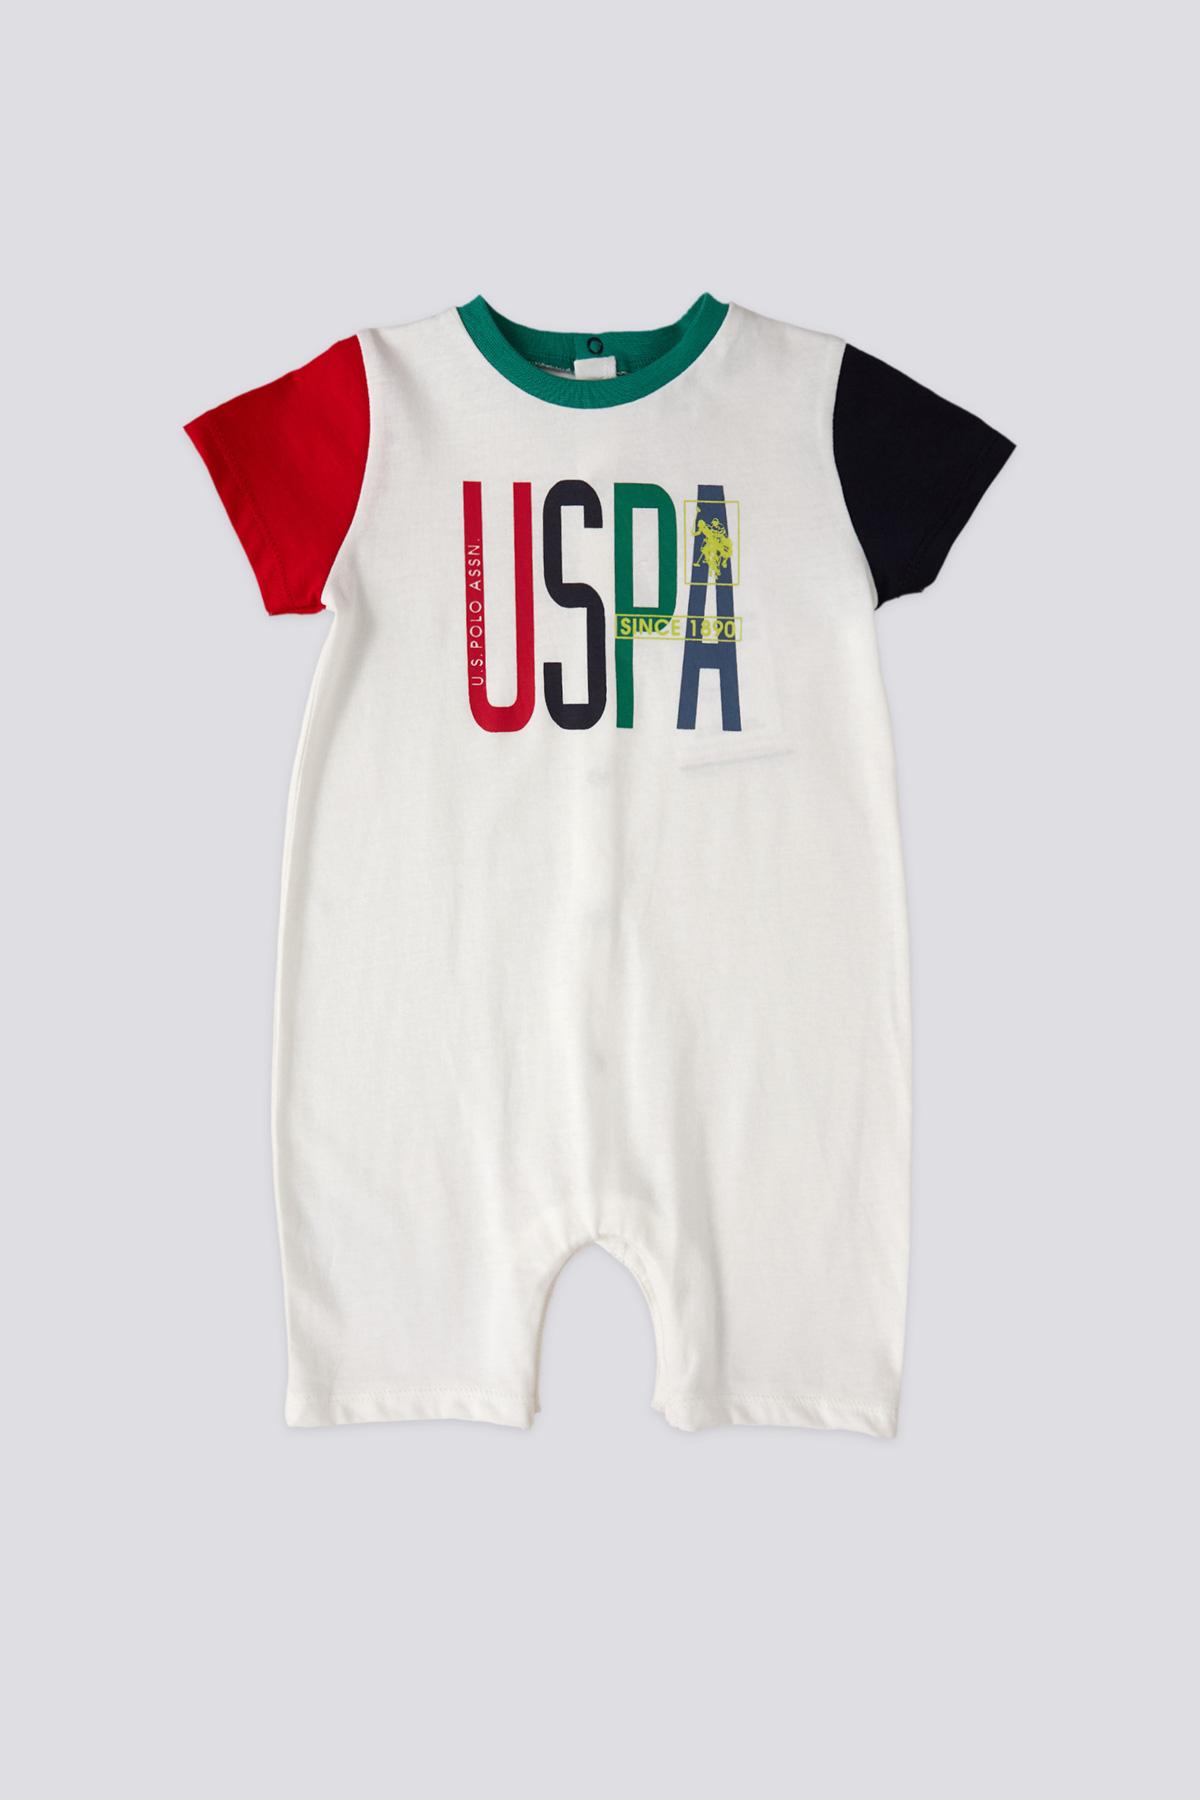 Selected image for U.S. Polo Assn. Odelo za bebe USB1825, Bez stopica, Belo